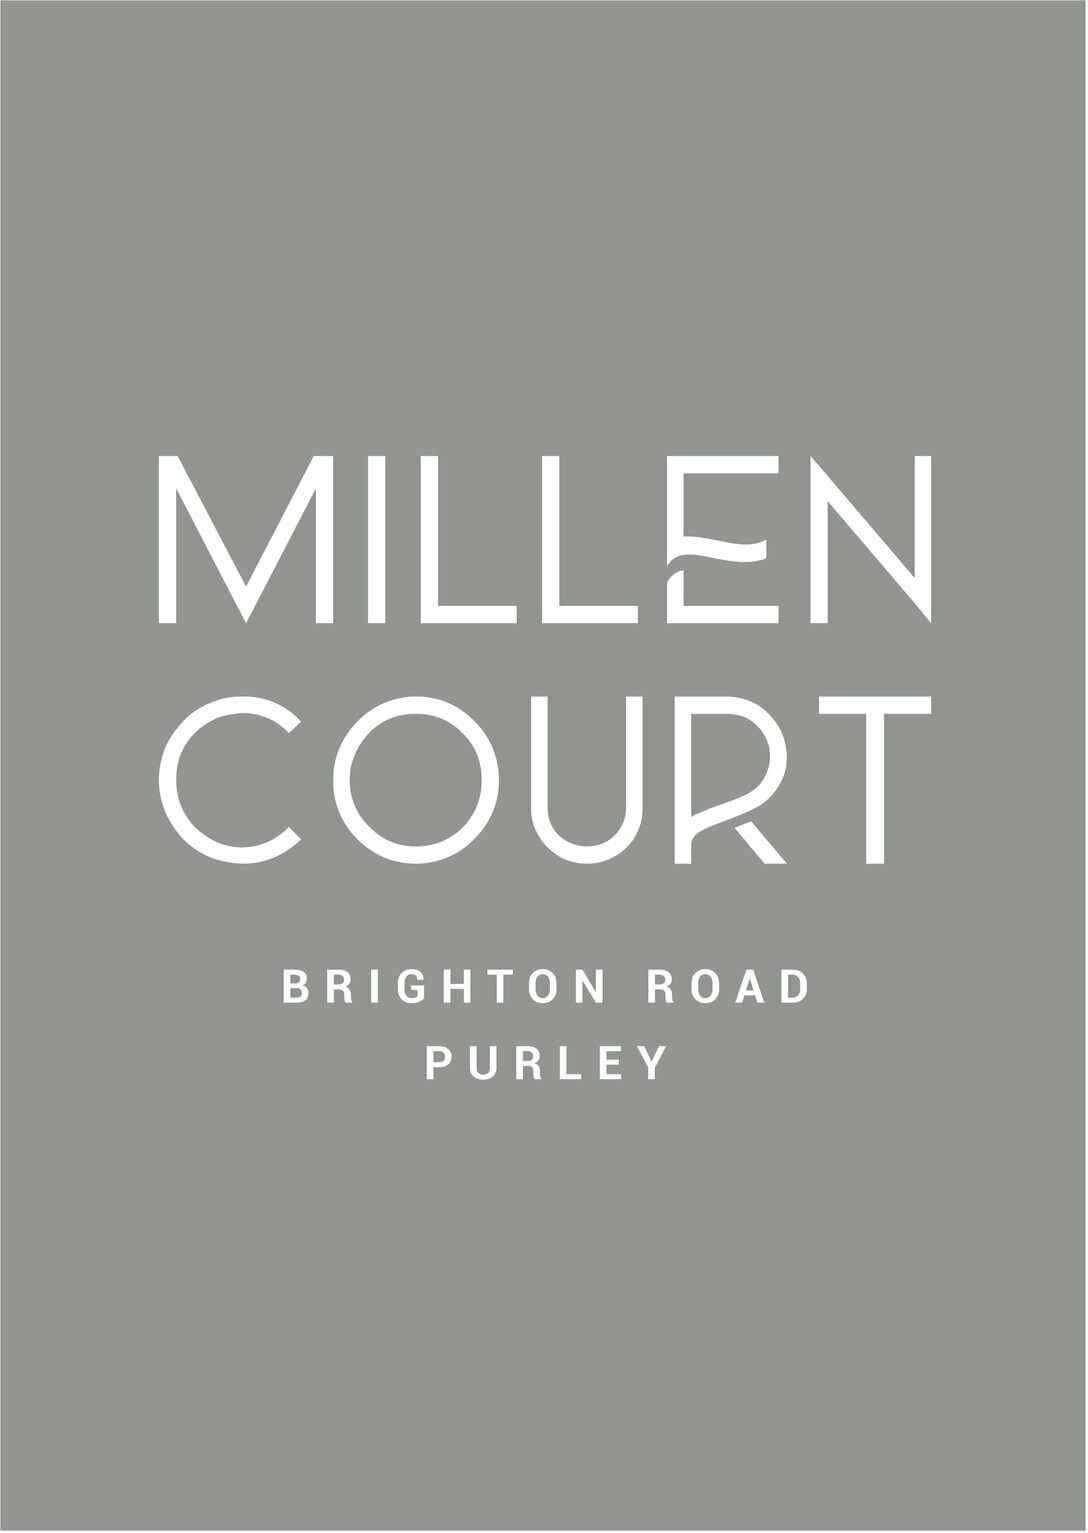 Millen Court Logo resized